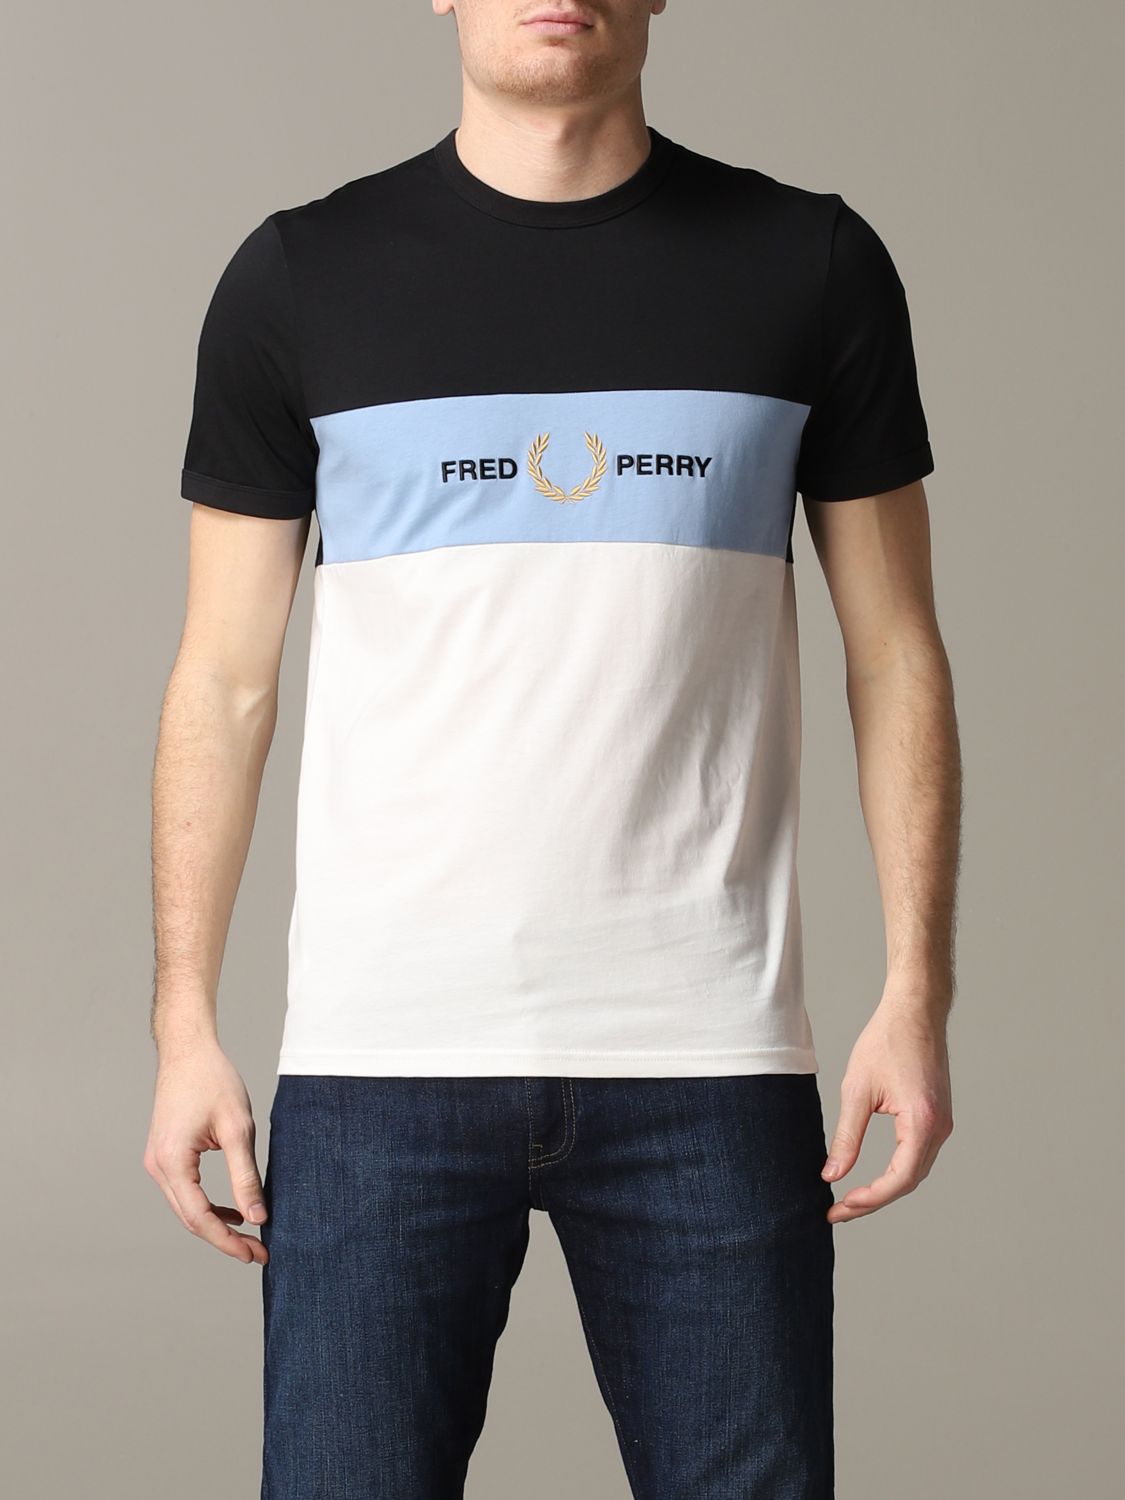 Outlet de Perry: Camiseta para hombre, Blanco Camiseta Fred Perry M8530 en línea GIGLIO.COM